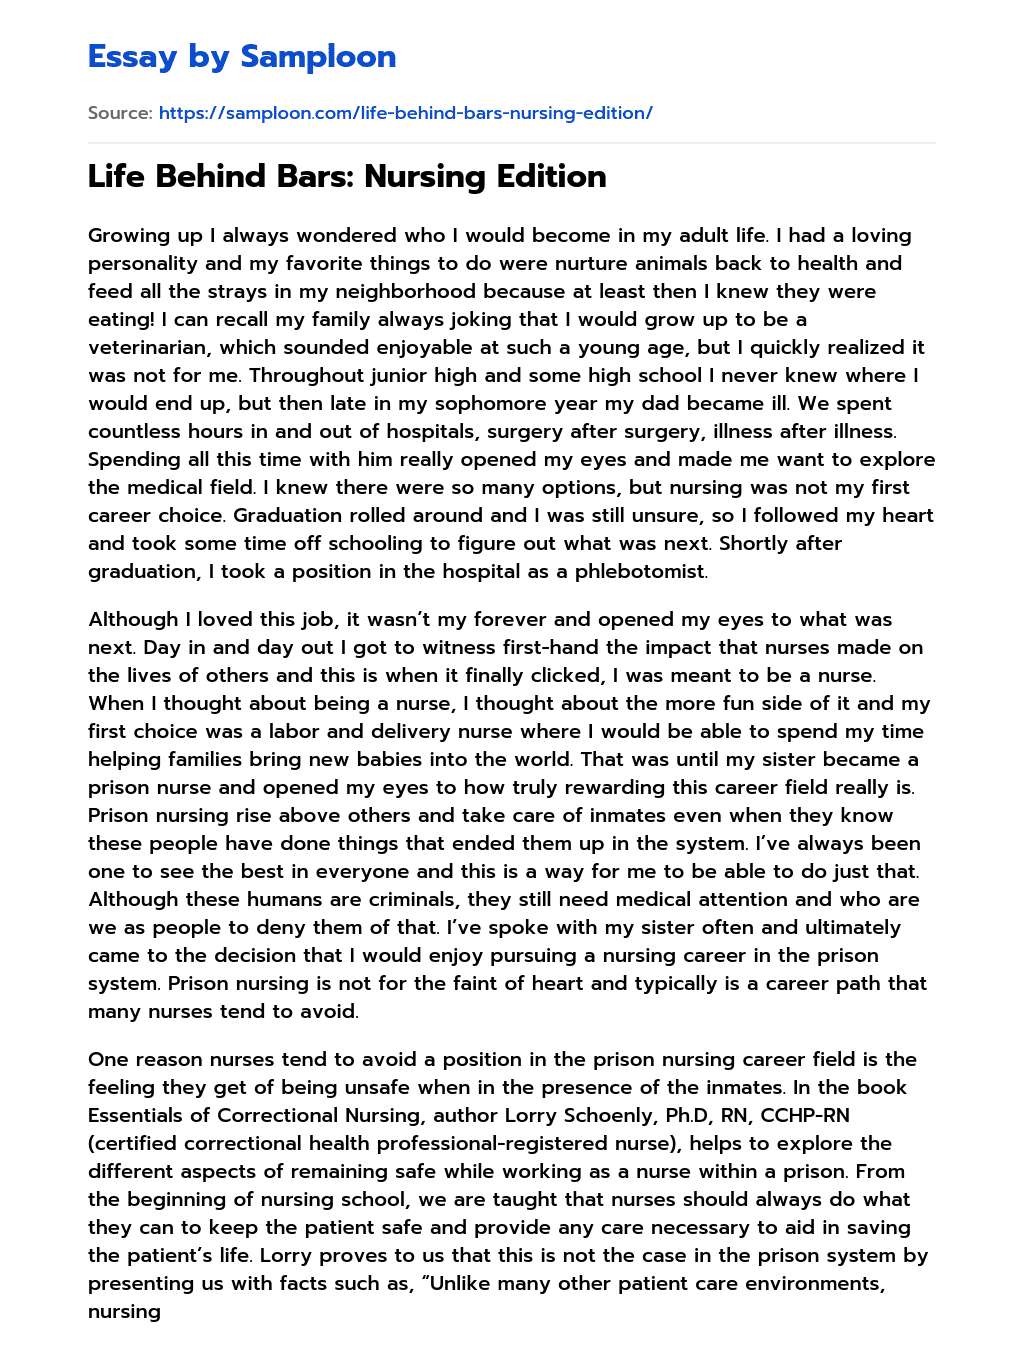 Life Behind Bars: Nursing Edition essay